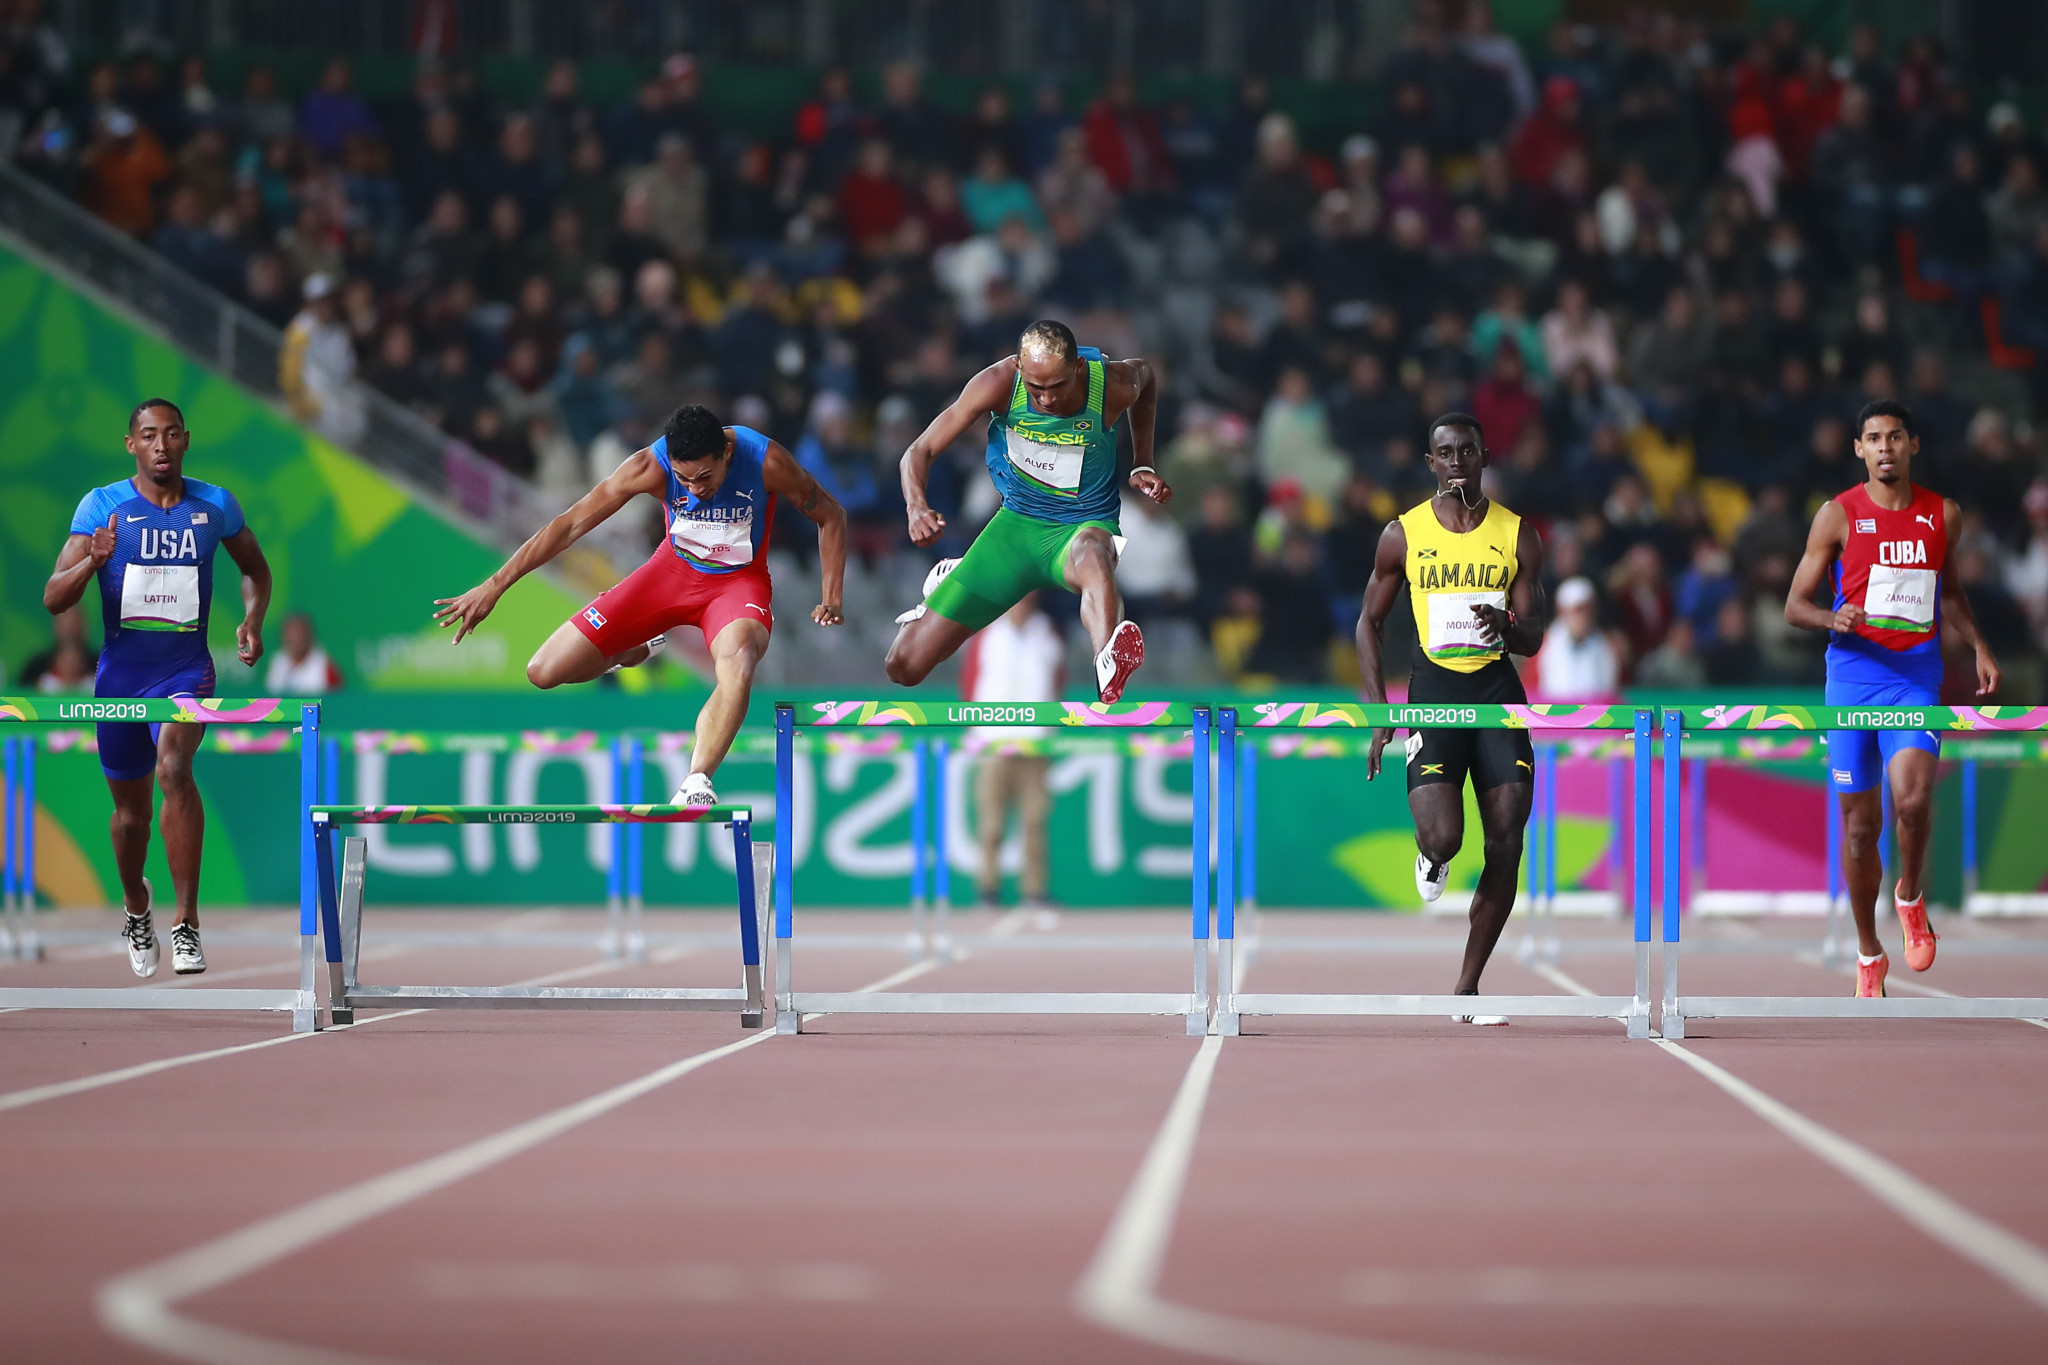 Juander Santos of Dominican Republic fell in the men's 400 metre hurdles at Lima 2019 ©Lima 2019